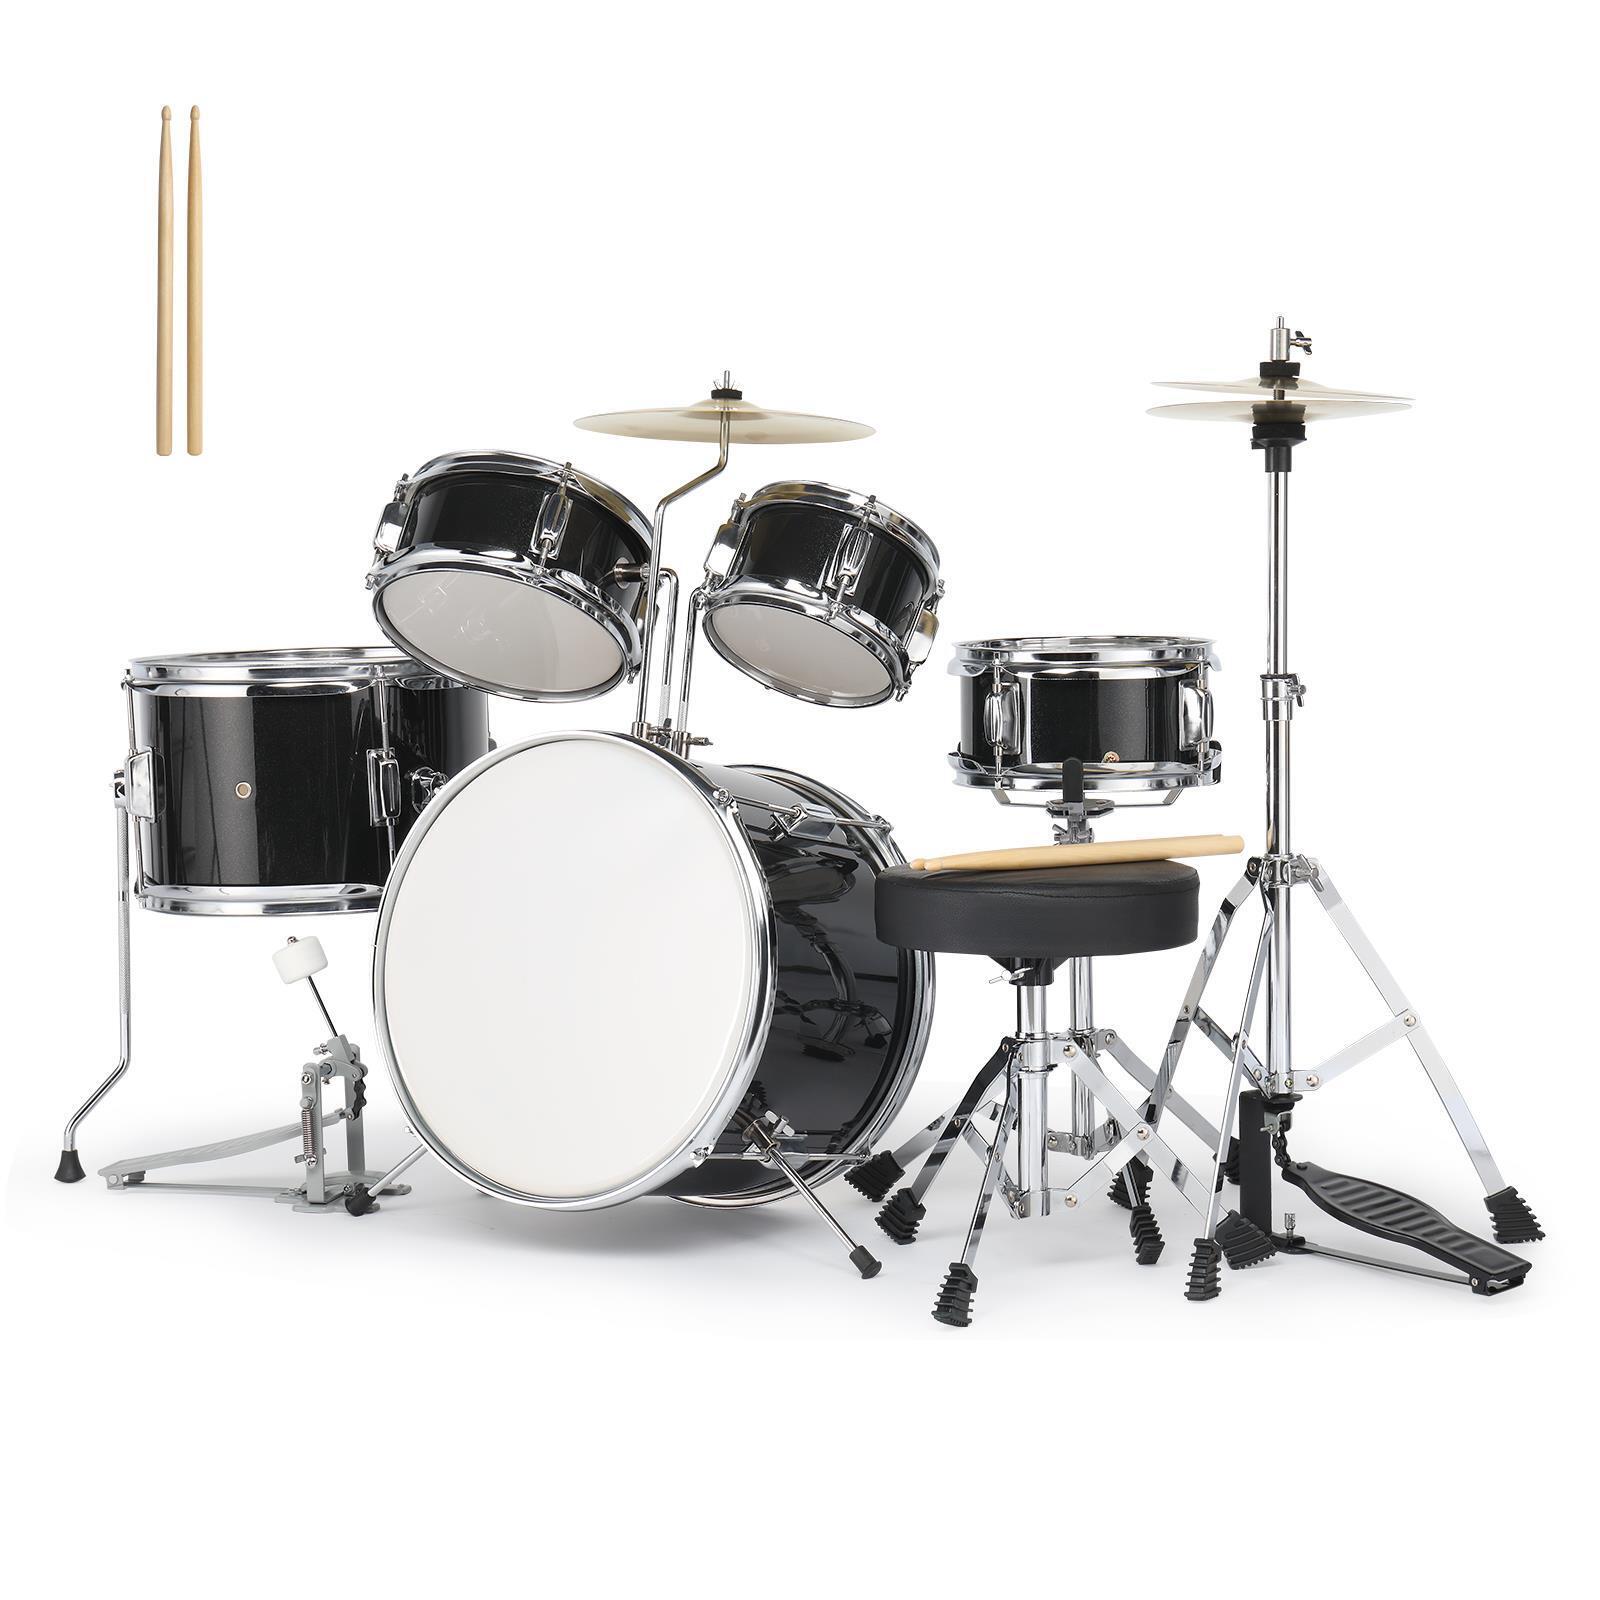 3-5-Piece Complete Junior Drum Set with Genuine Brass Cymbals for Beginner Kids 2